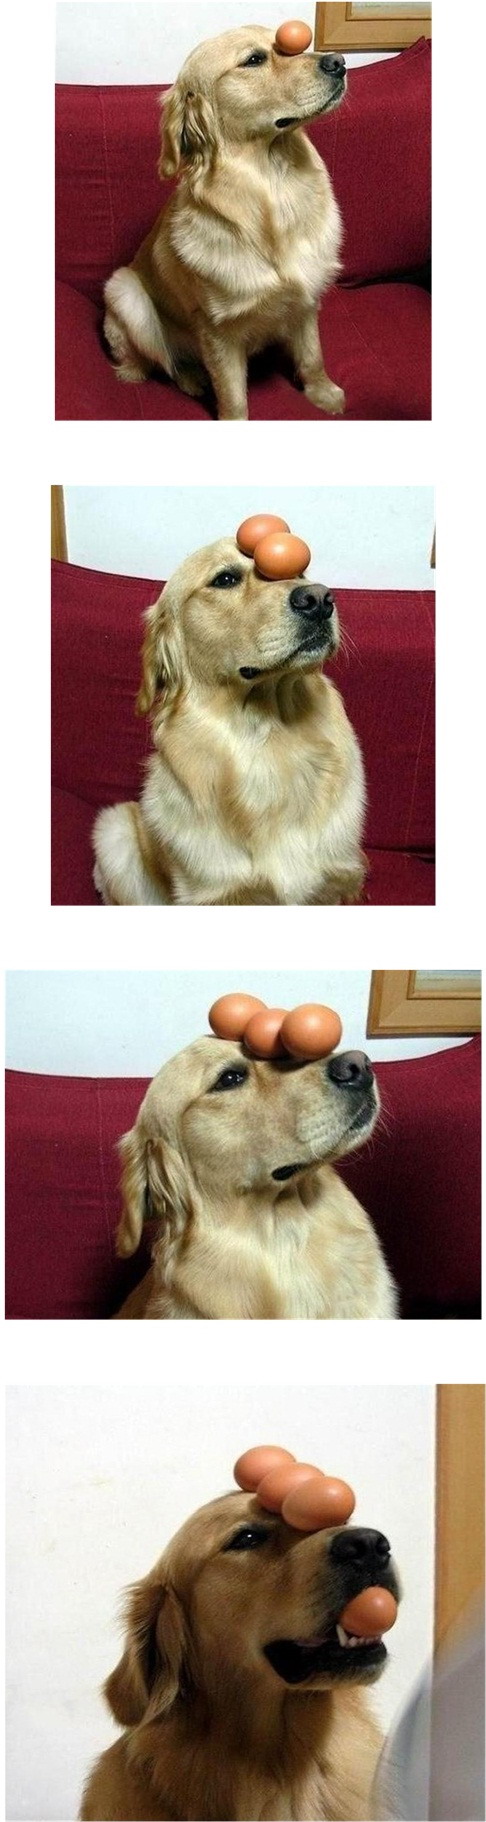 Dog balances eggs